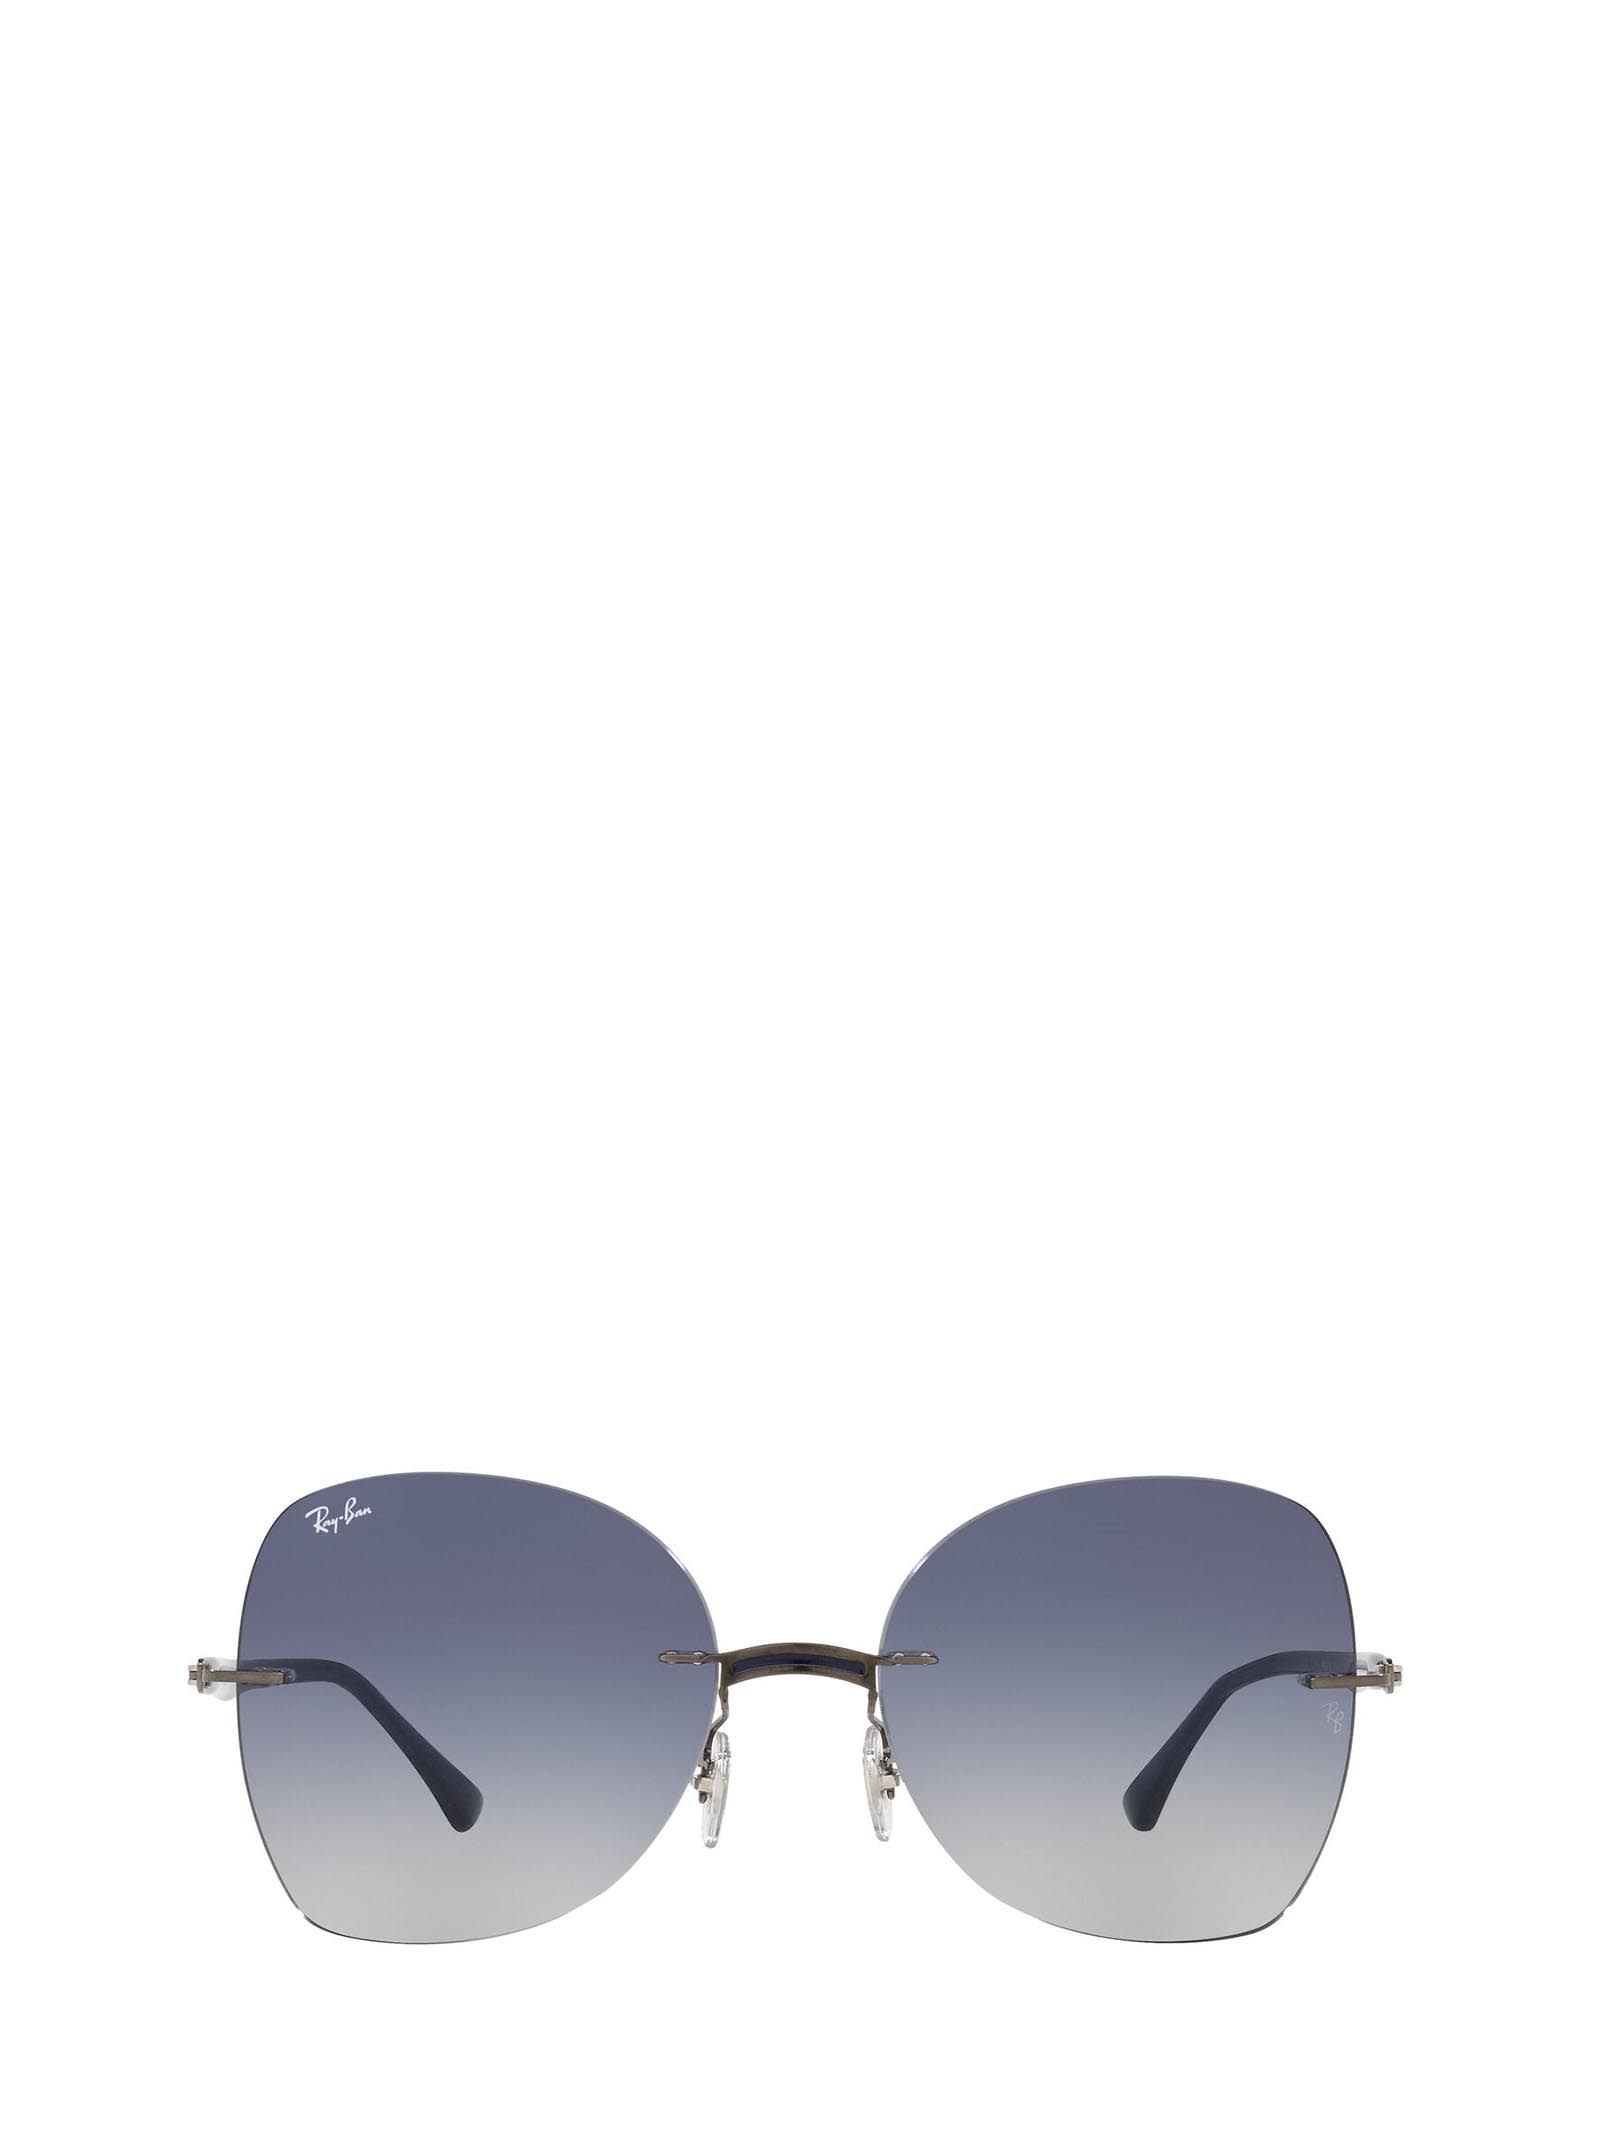 Ray-Ban Ray-ban Rb8066 Blue On Gunmetal Sunglasses